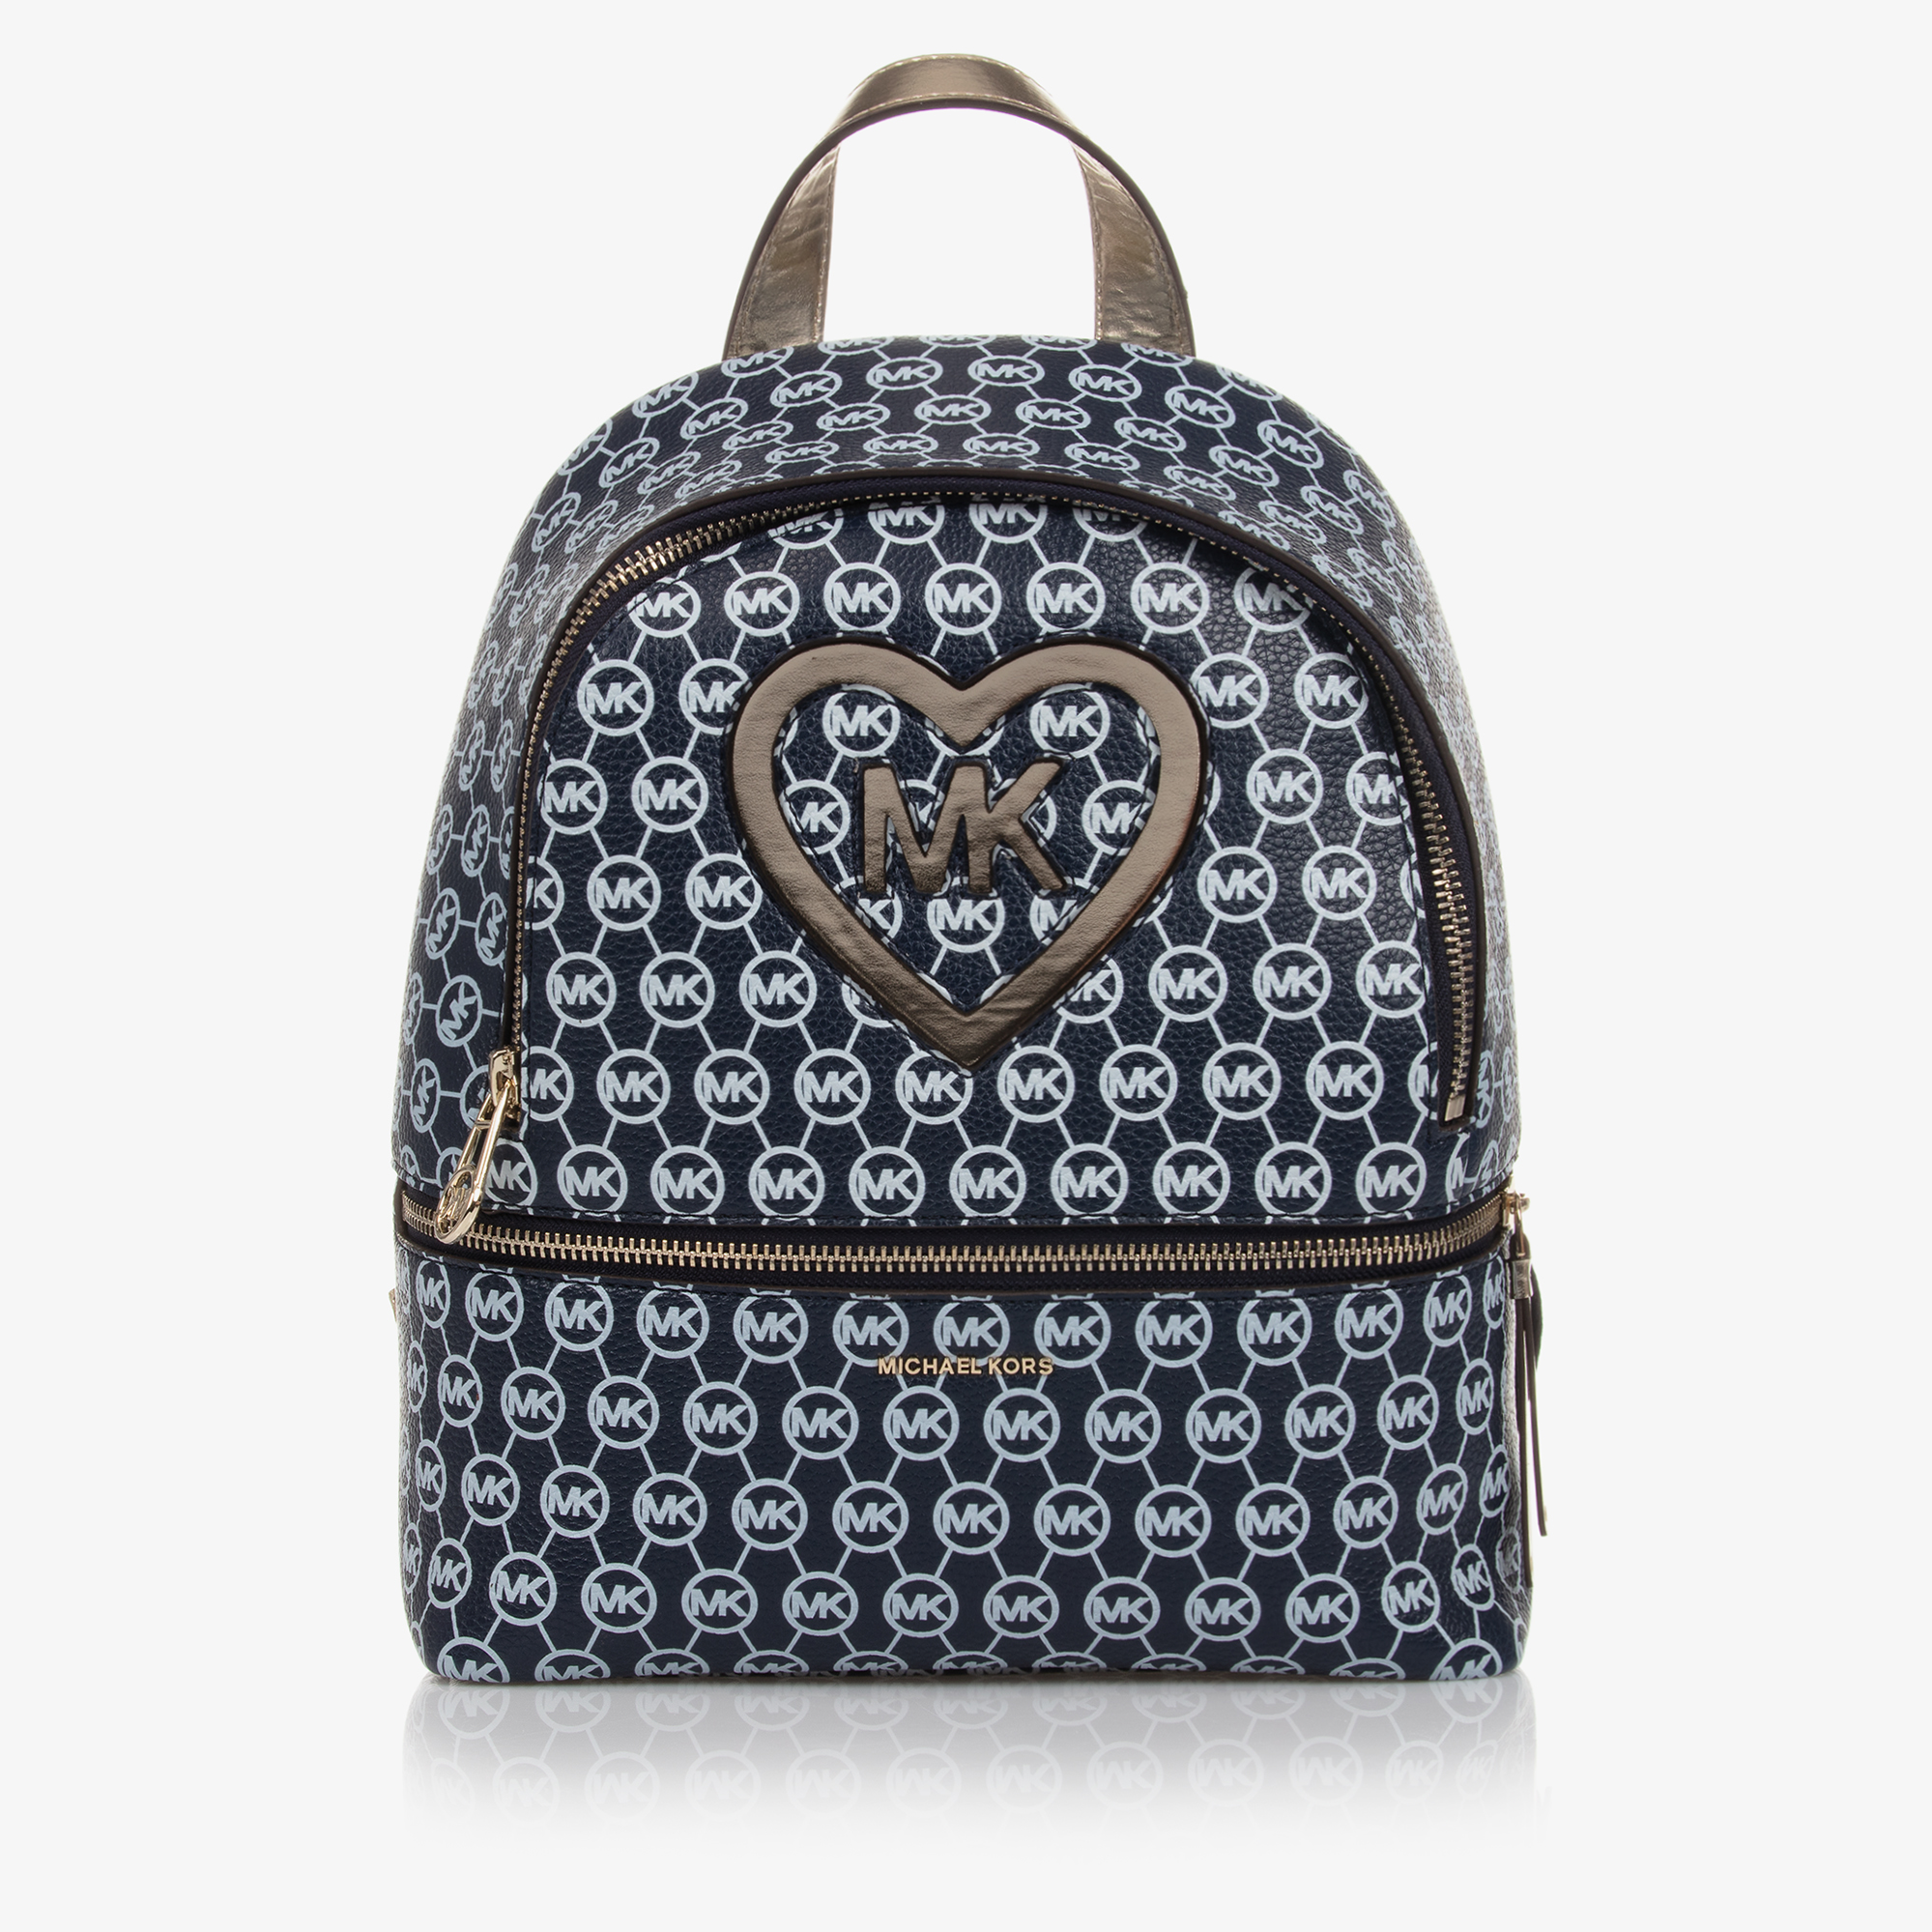 michael kors blue backpack